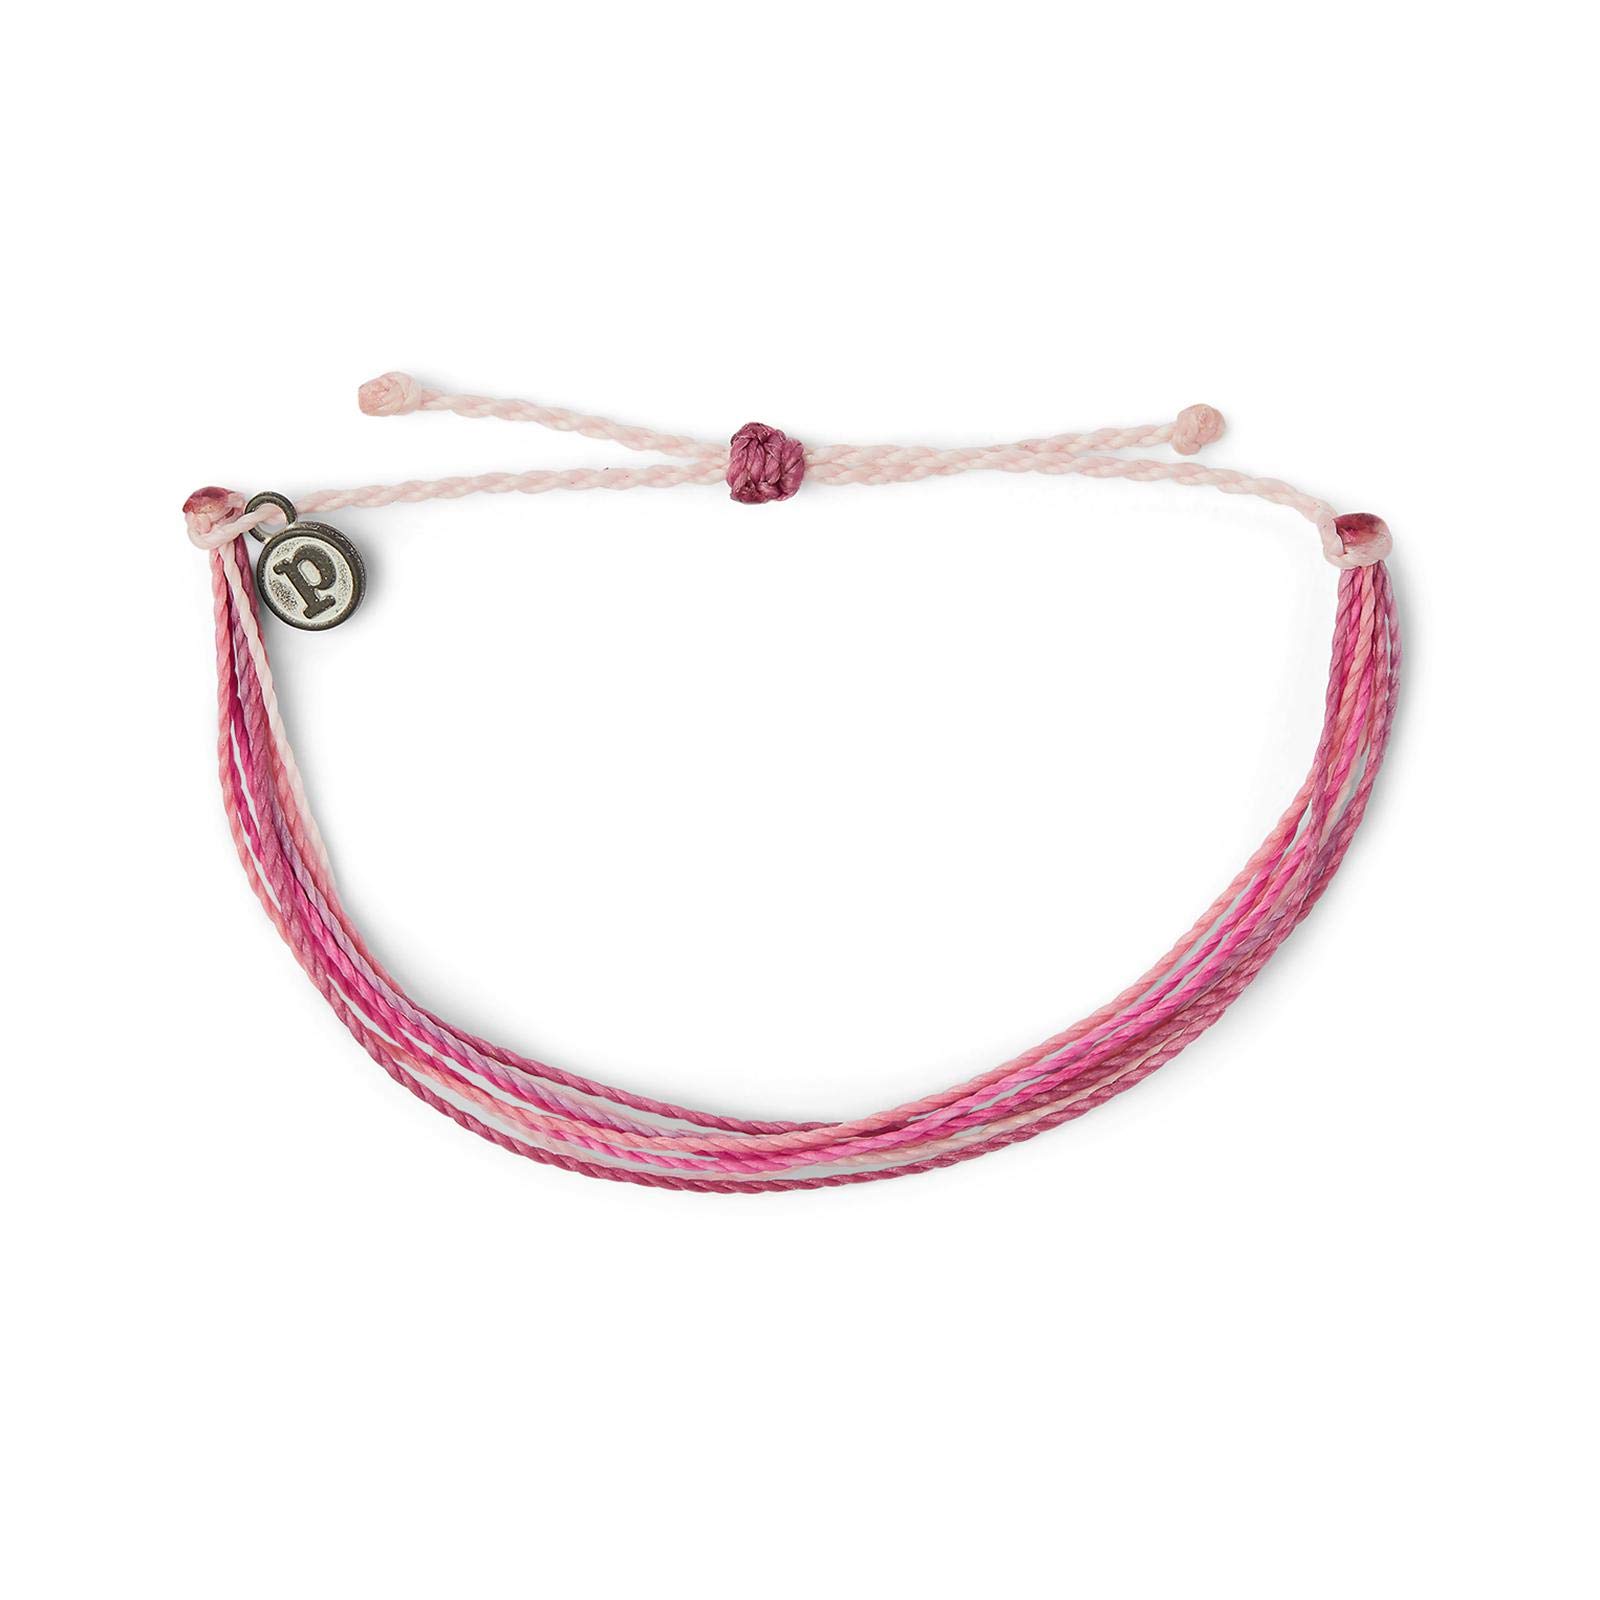 Pura Vida Jewelry Bracelets Muted Bracelet - 100% Waterproof and Handmade w/Coated Charm, Adjustable Band